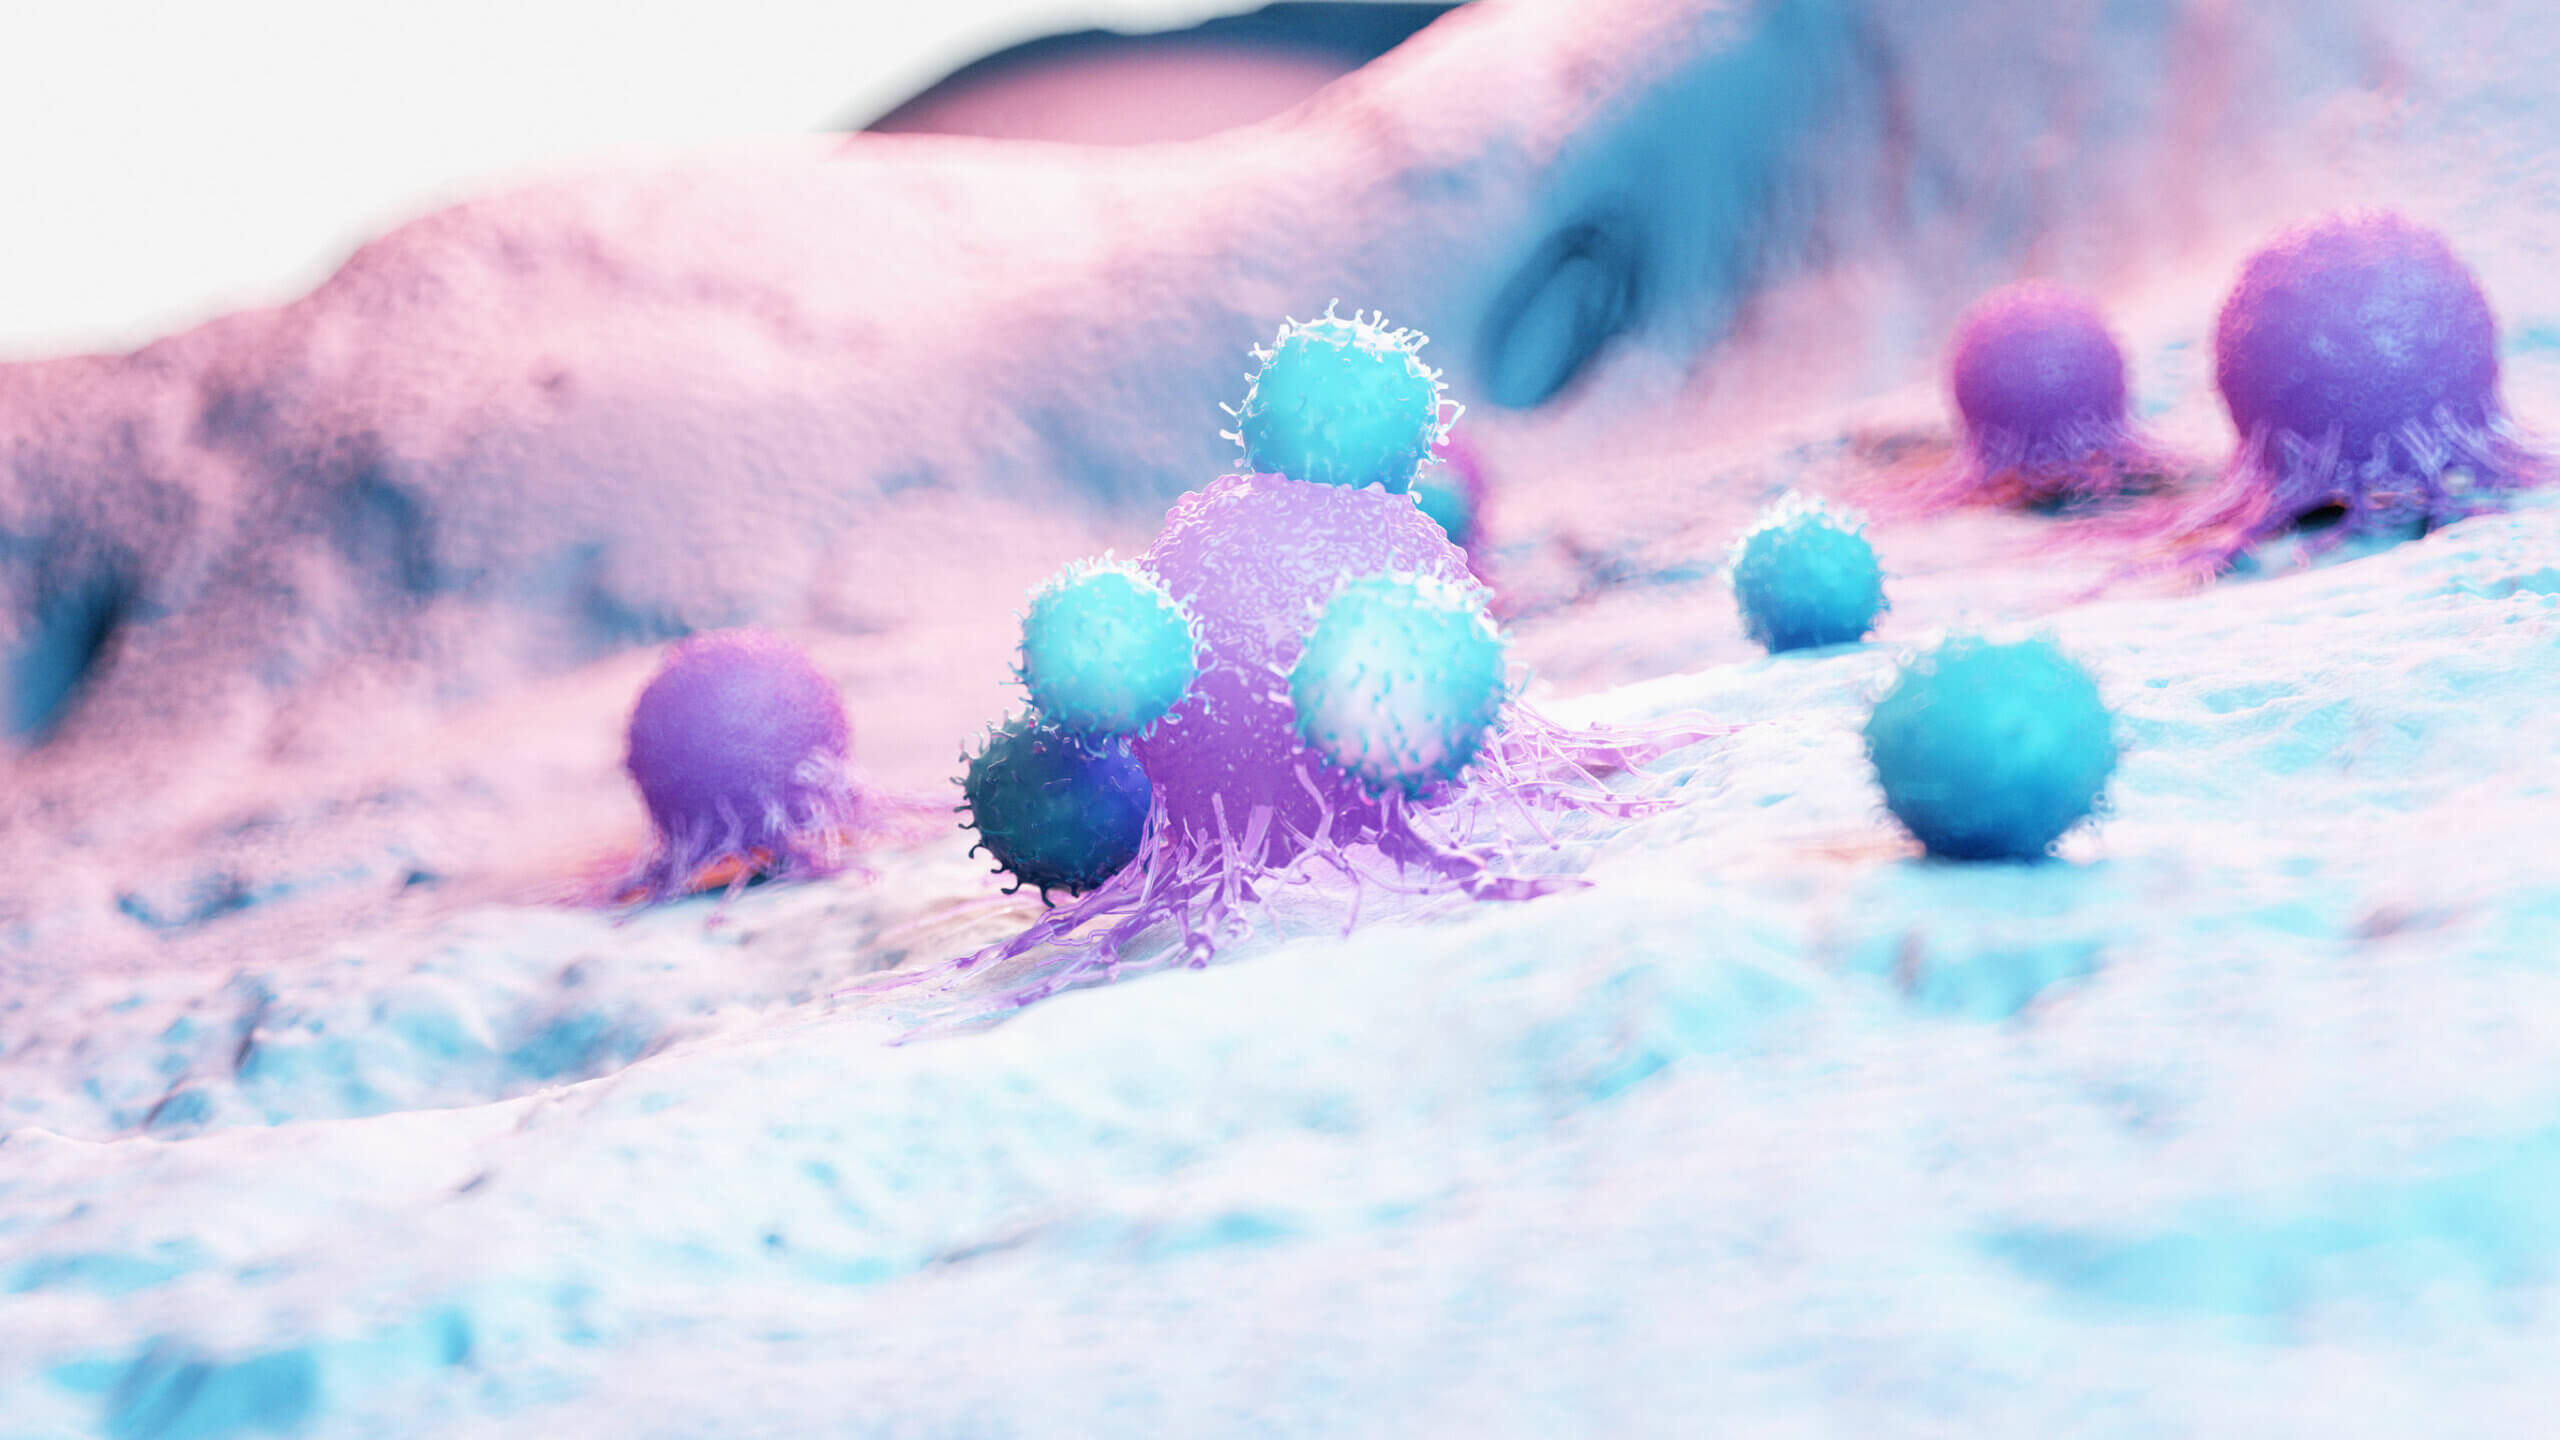 Monociti nel sistema immunitario